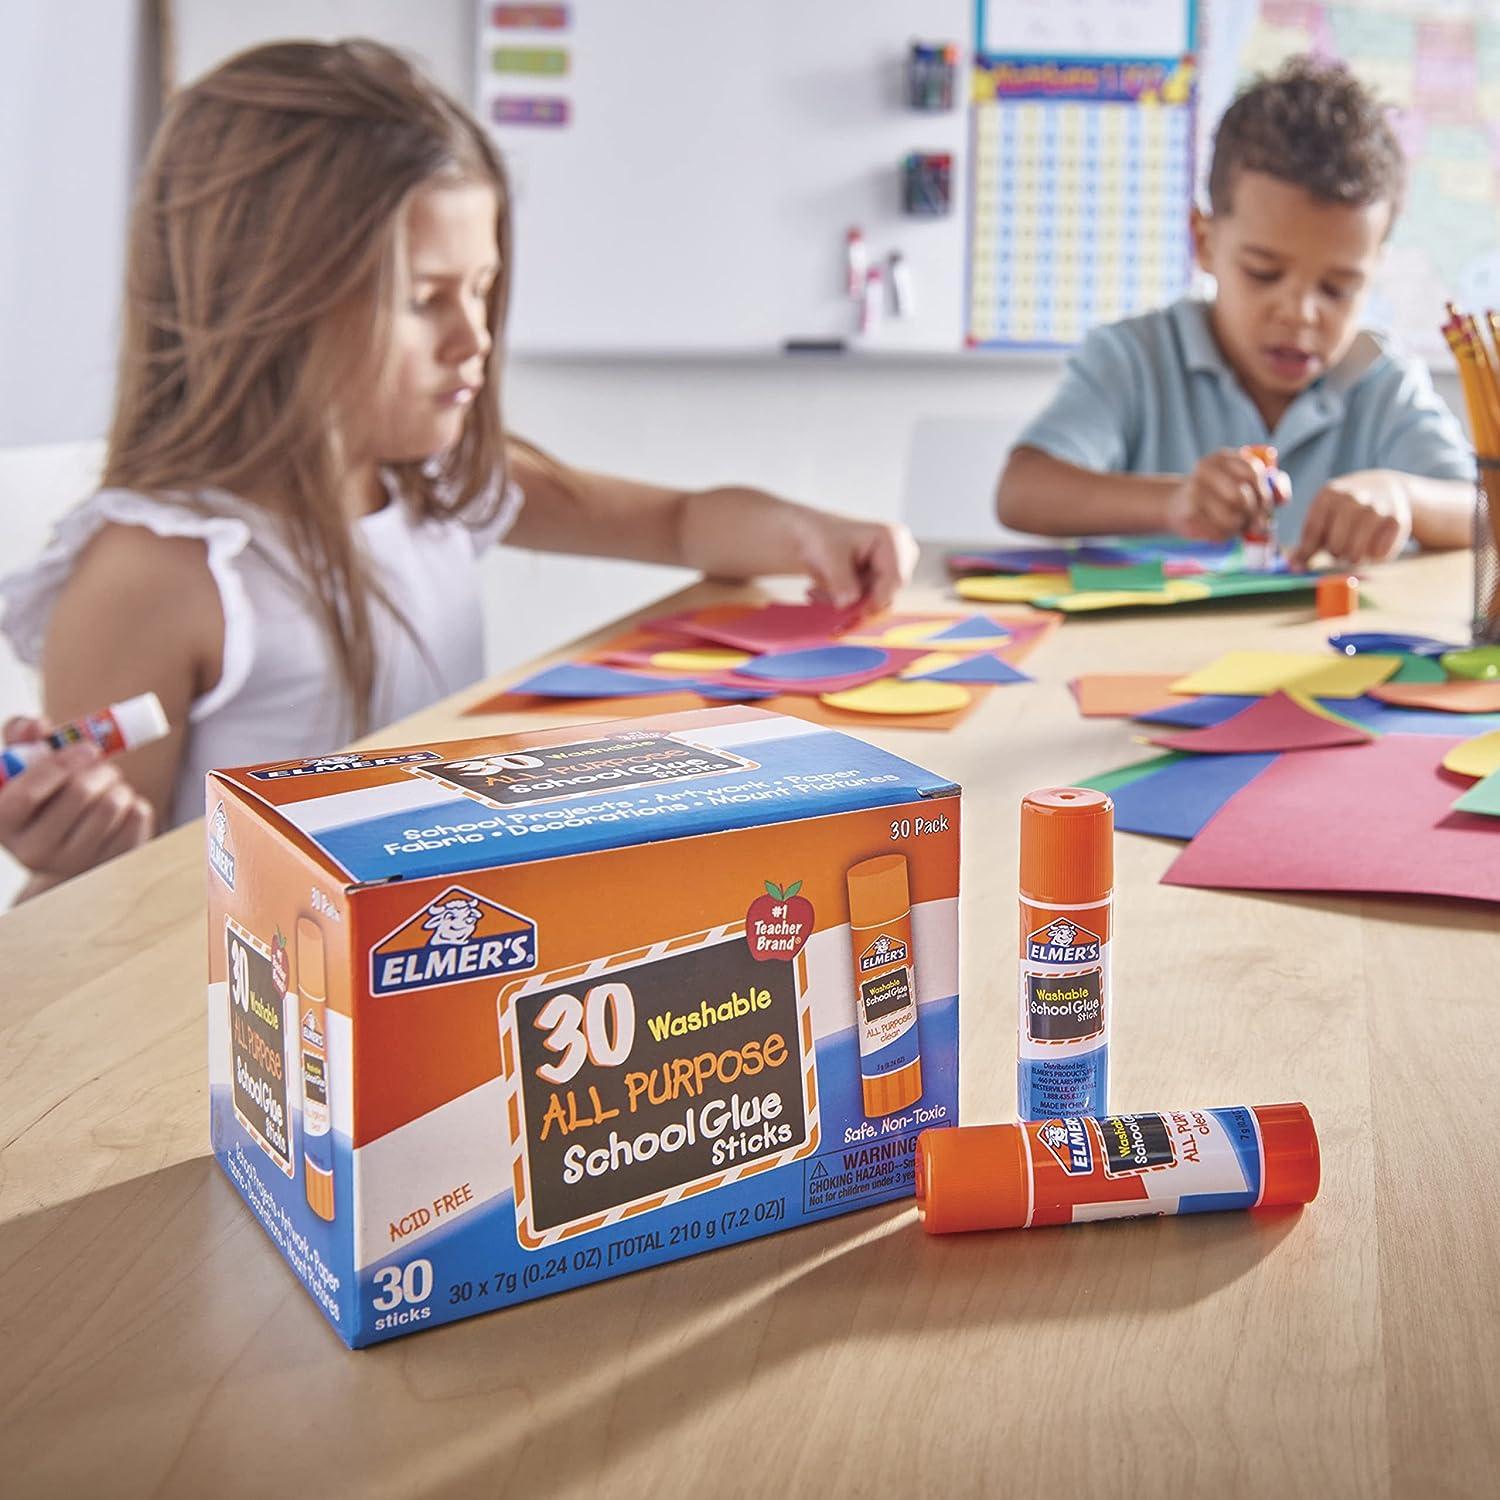 Elmer's Washable All Purpose School Glue Sticks, Clear, 30-box